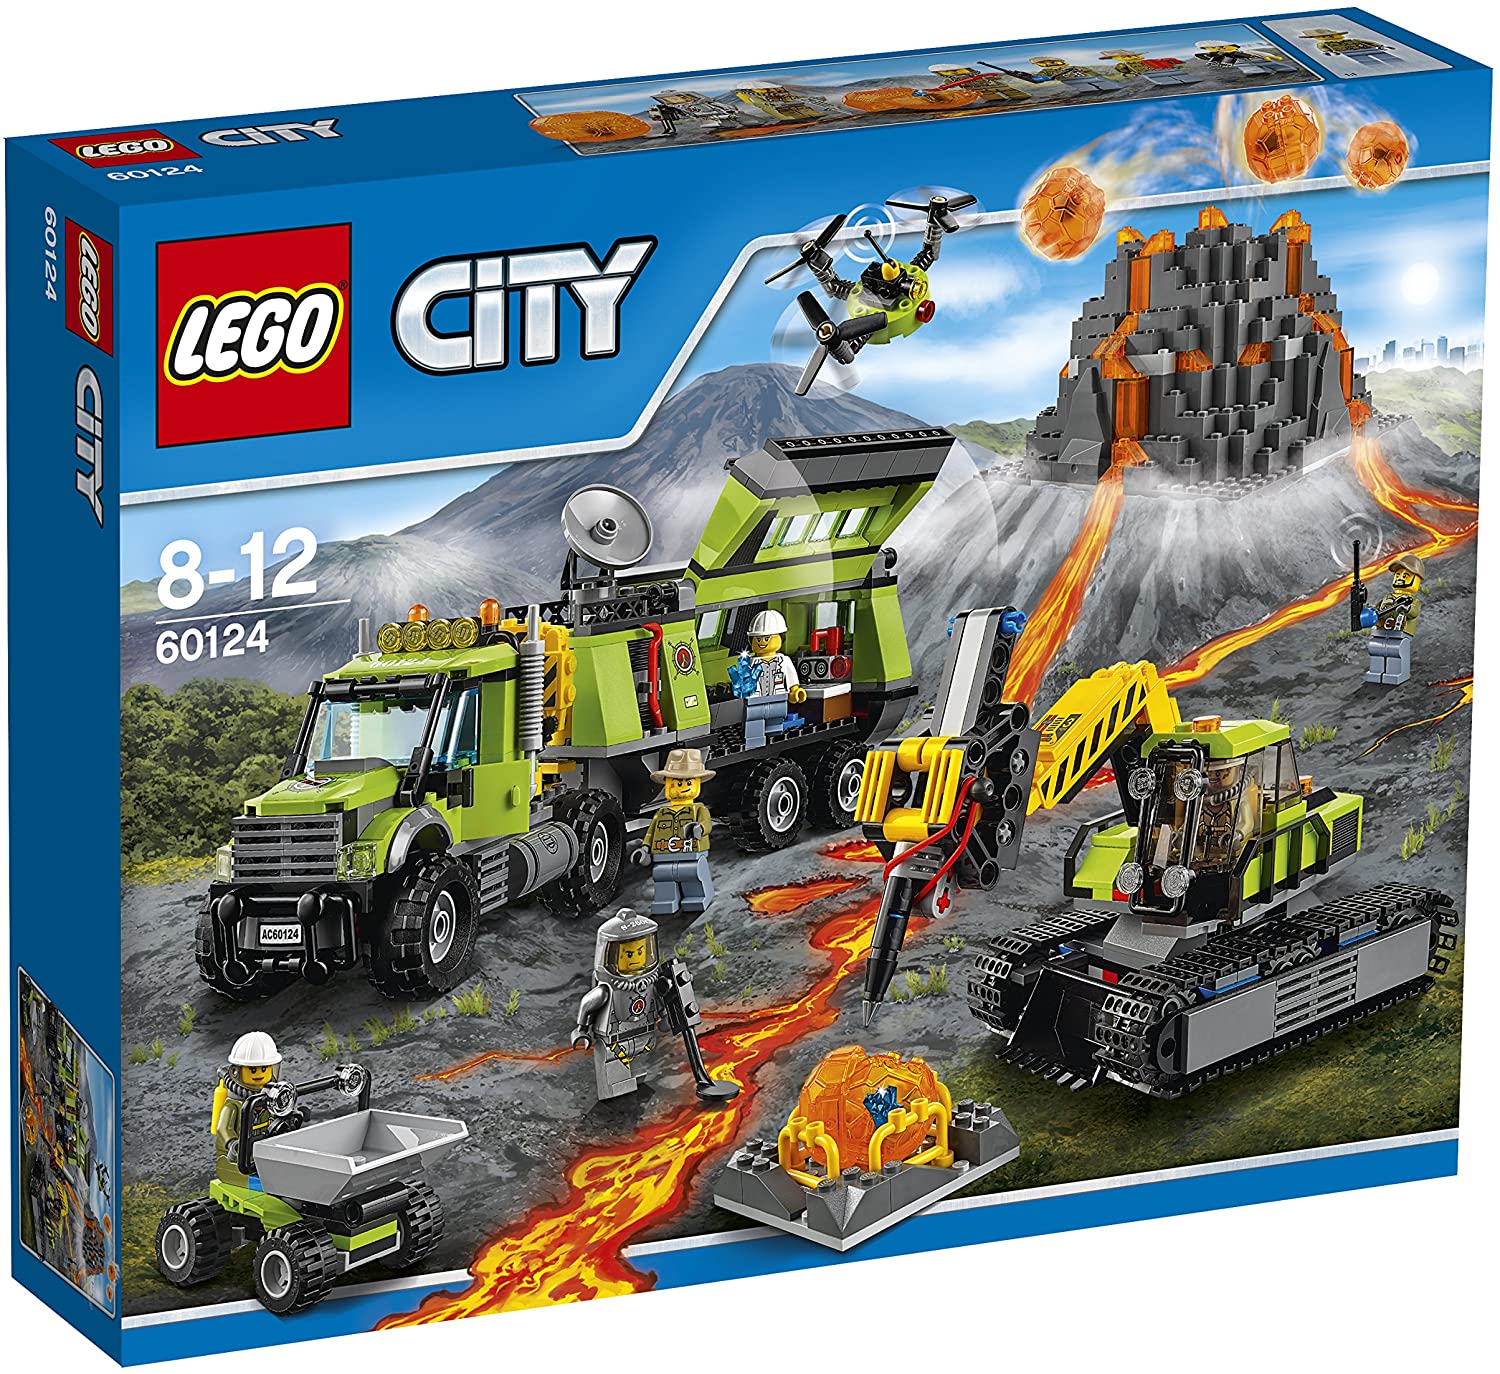 Lego City 60124 - Volcano Exploration Base